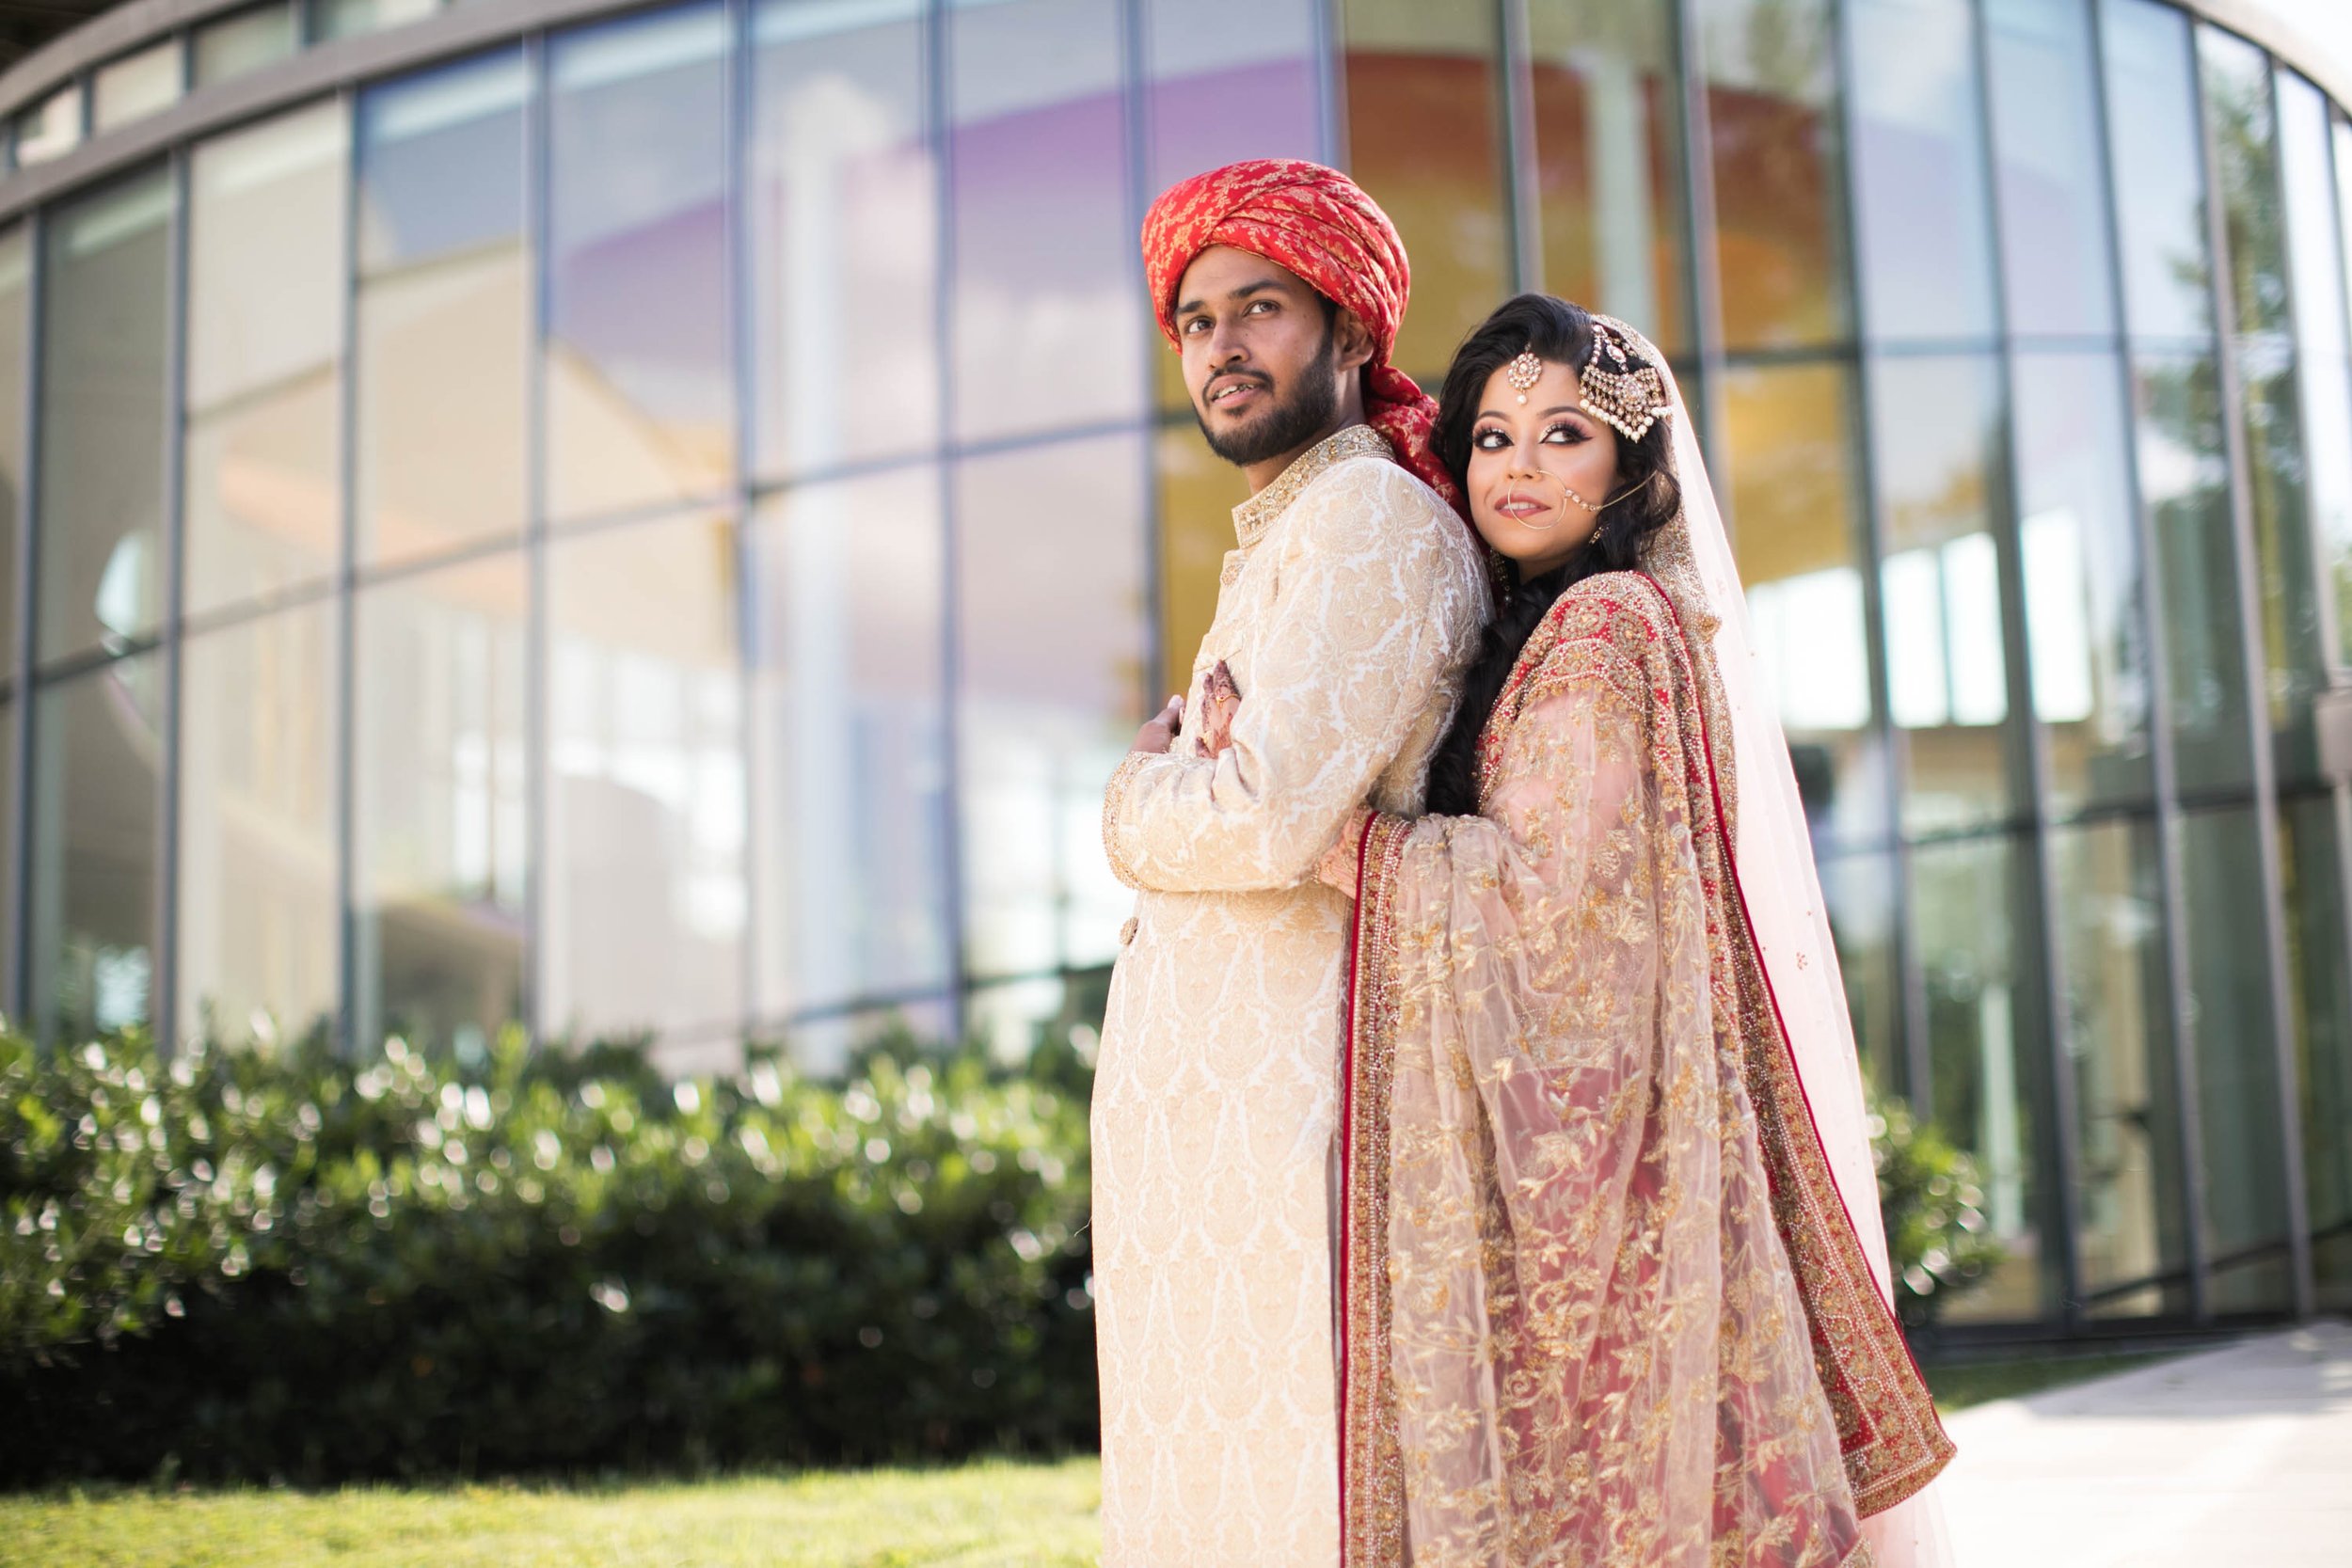 Bengali Bridal Portrait 2020 || Red Benarashi || Kolka || Mukut || Indian Bride  Photography Pose - YouTube